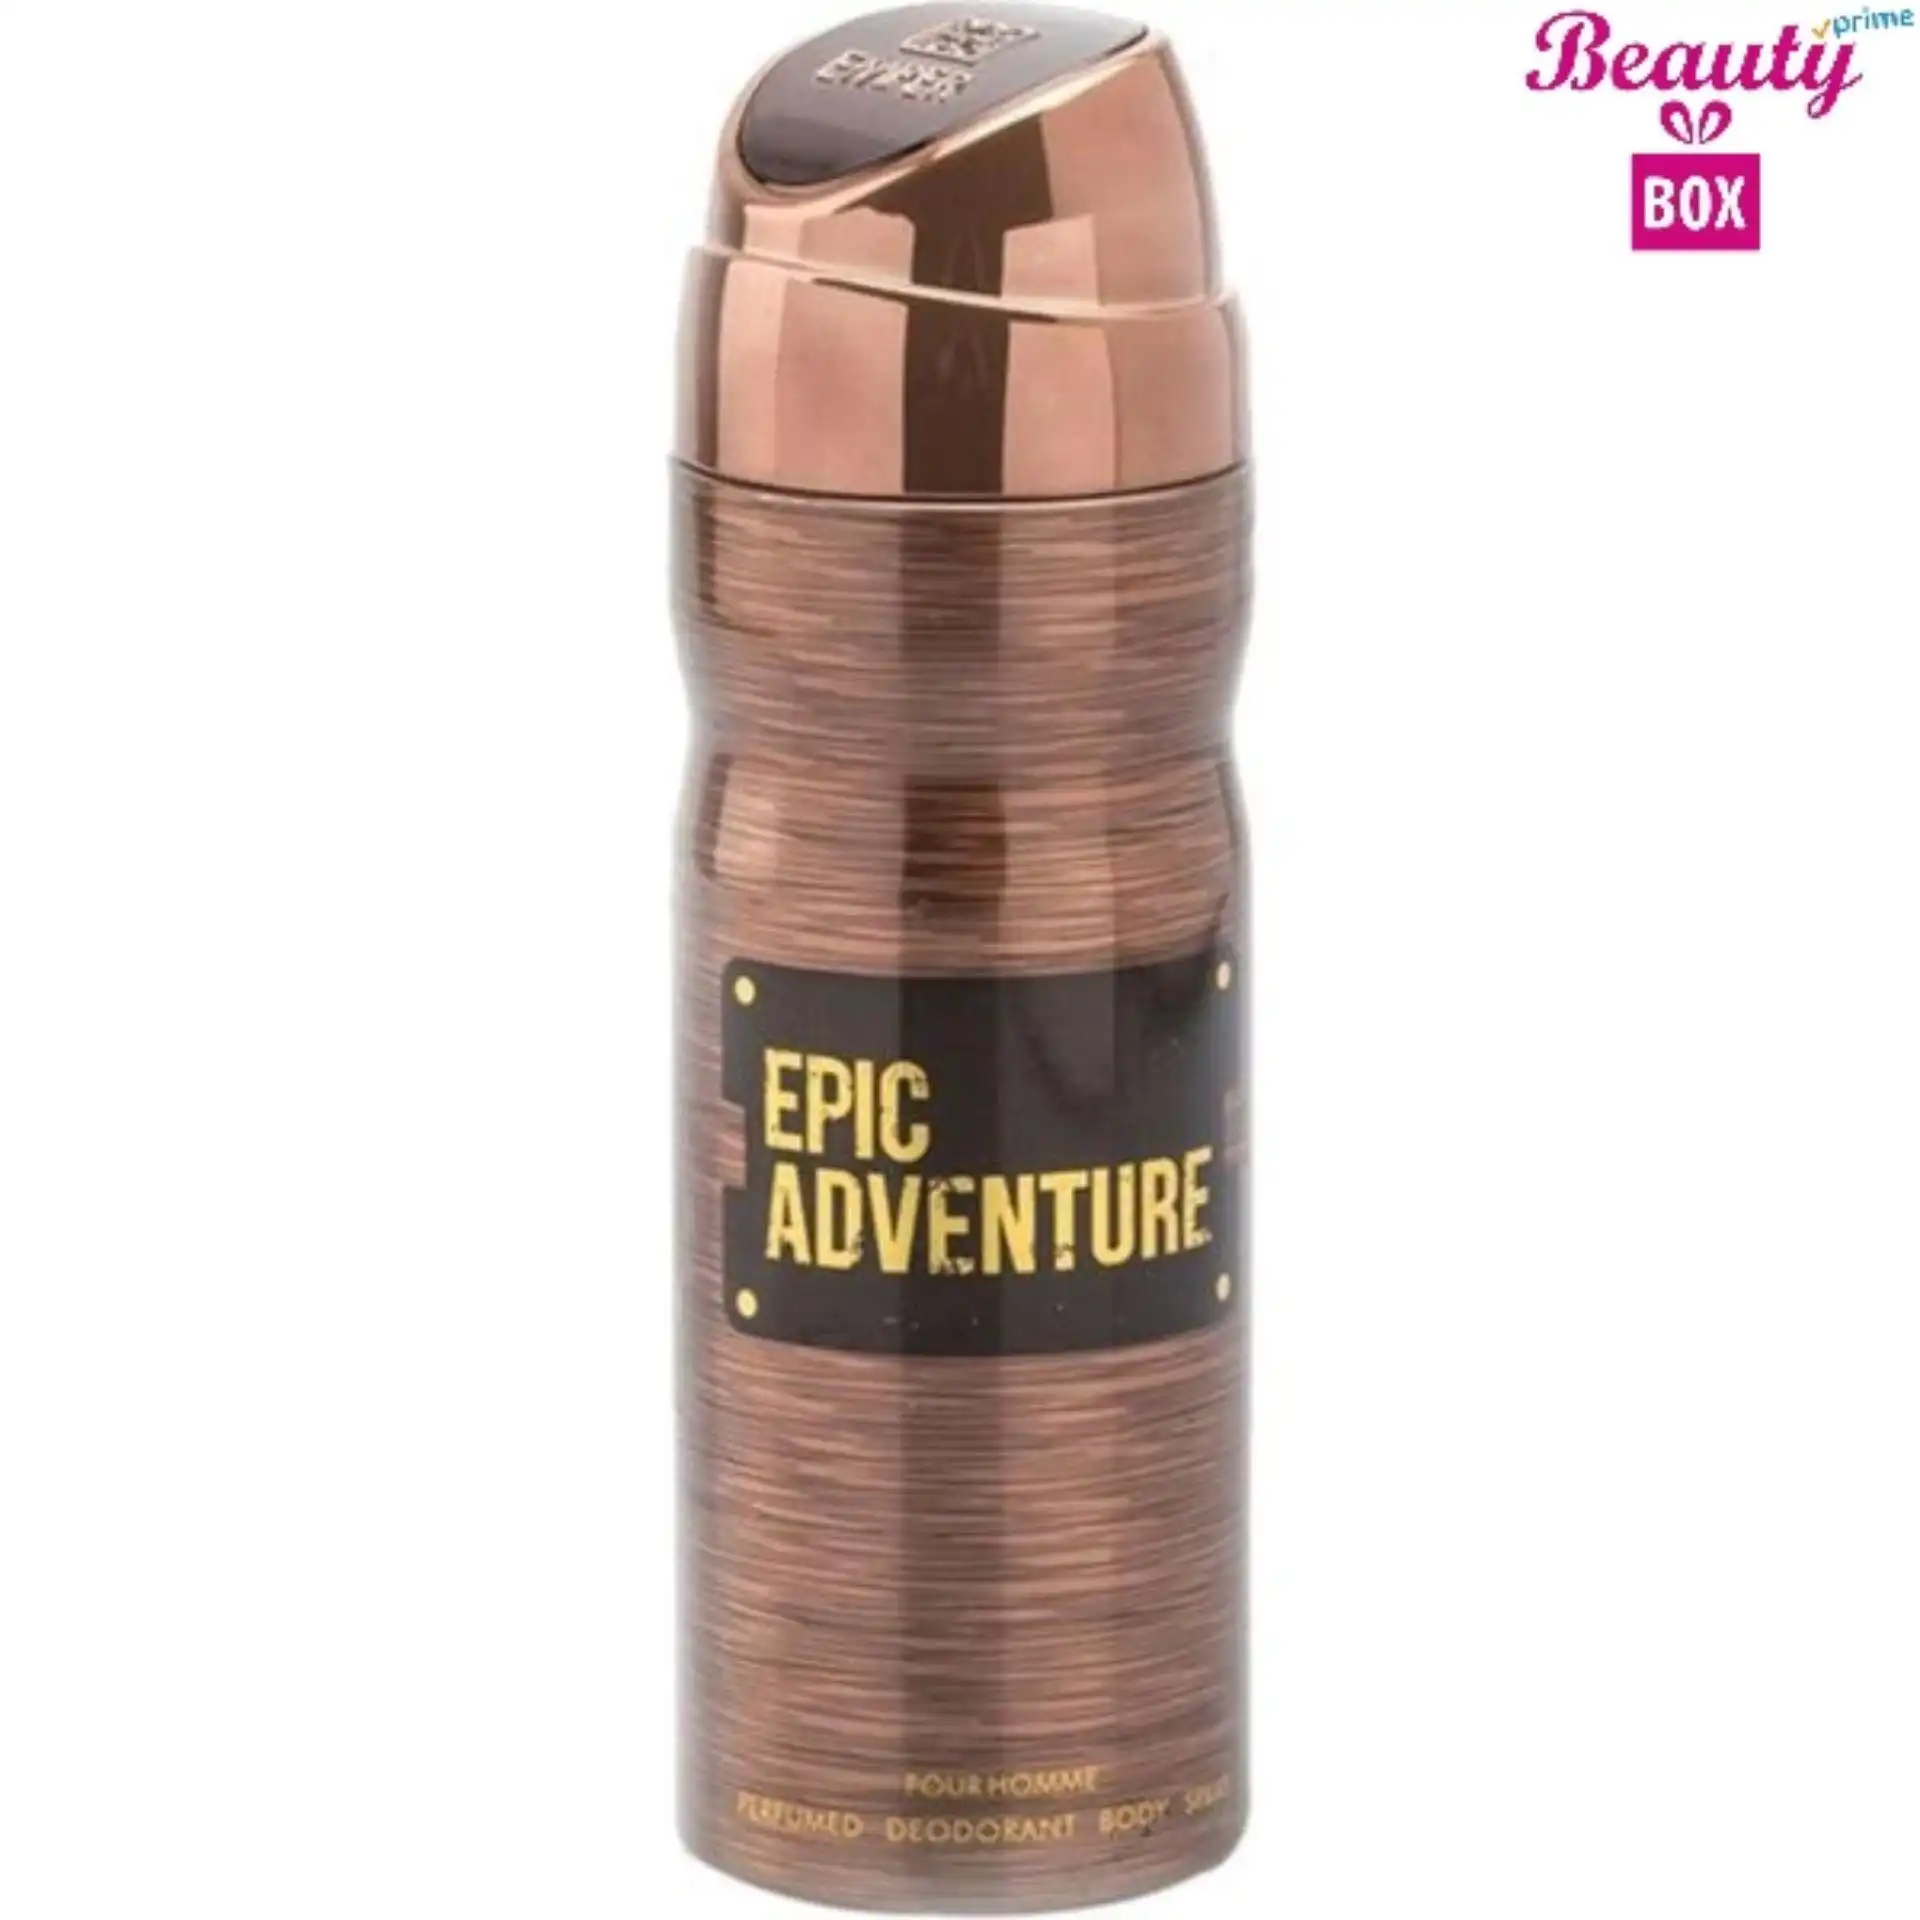 Emper Epic Adventure Deodorant Body Spray For Men - 200Ml